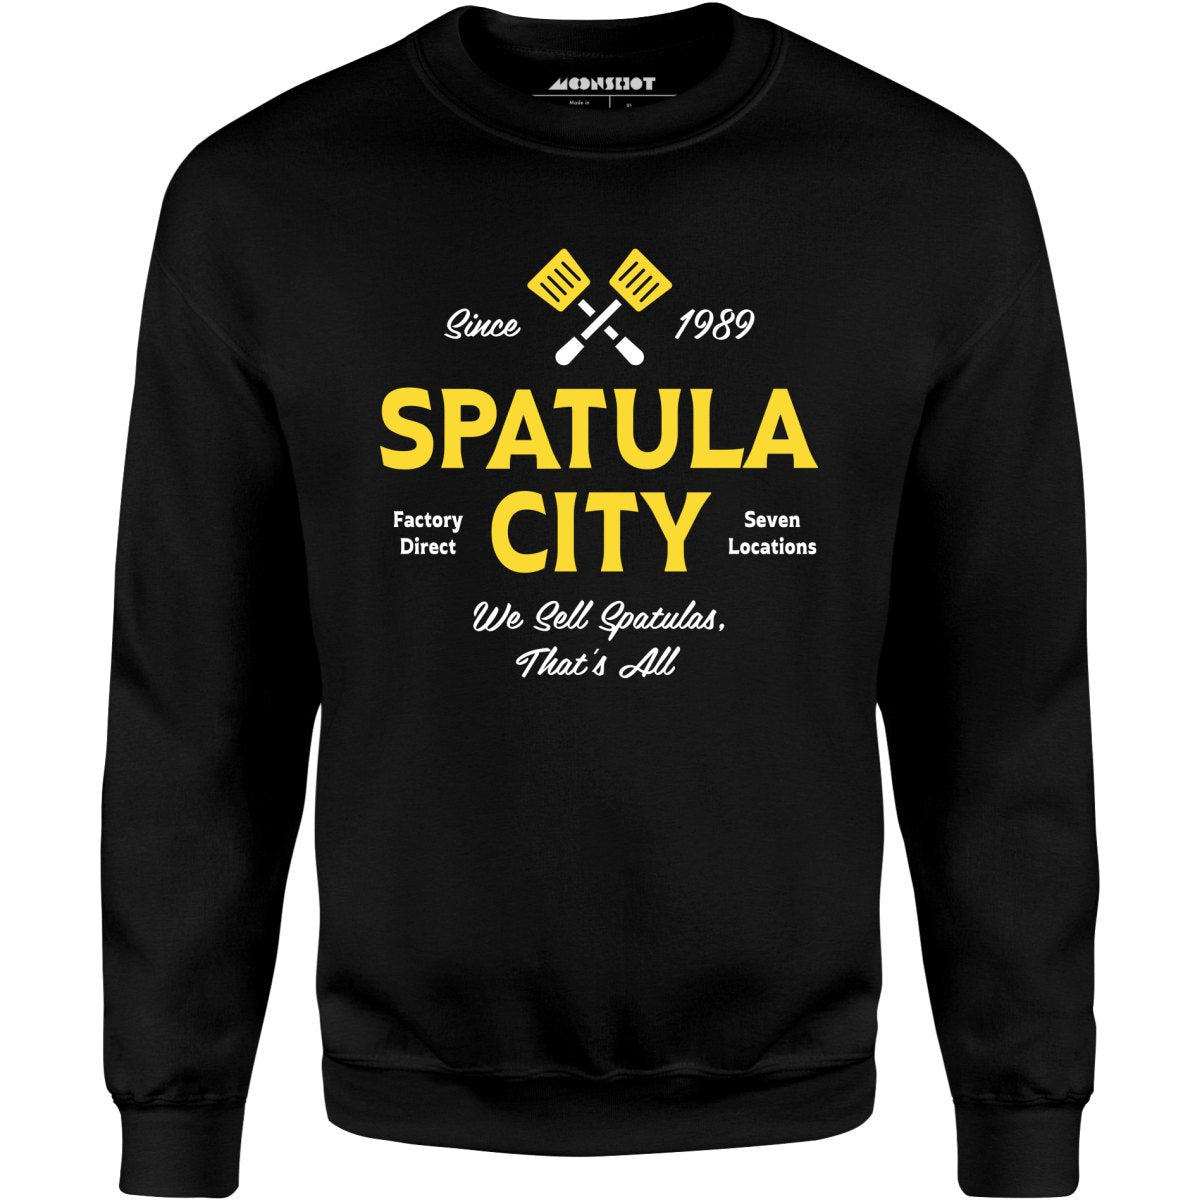 Spatula City - Unisex Sweatshirt